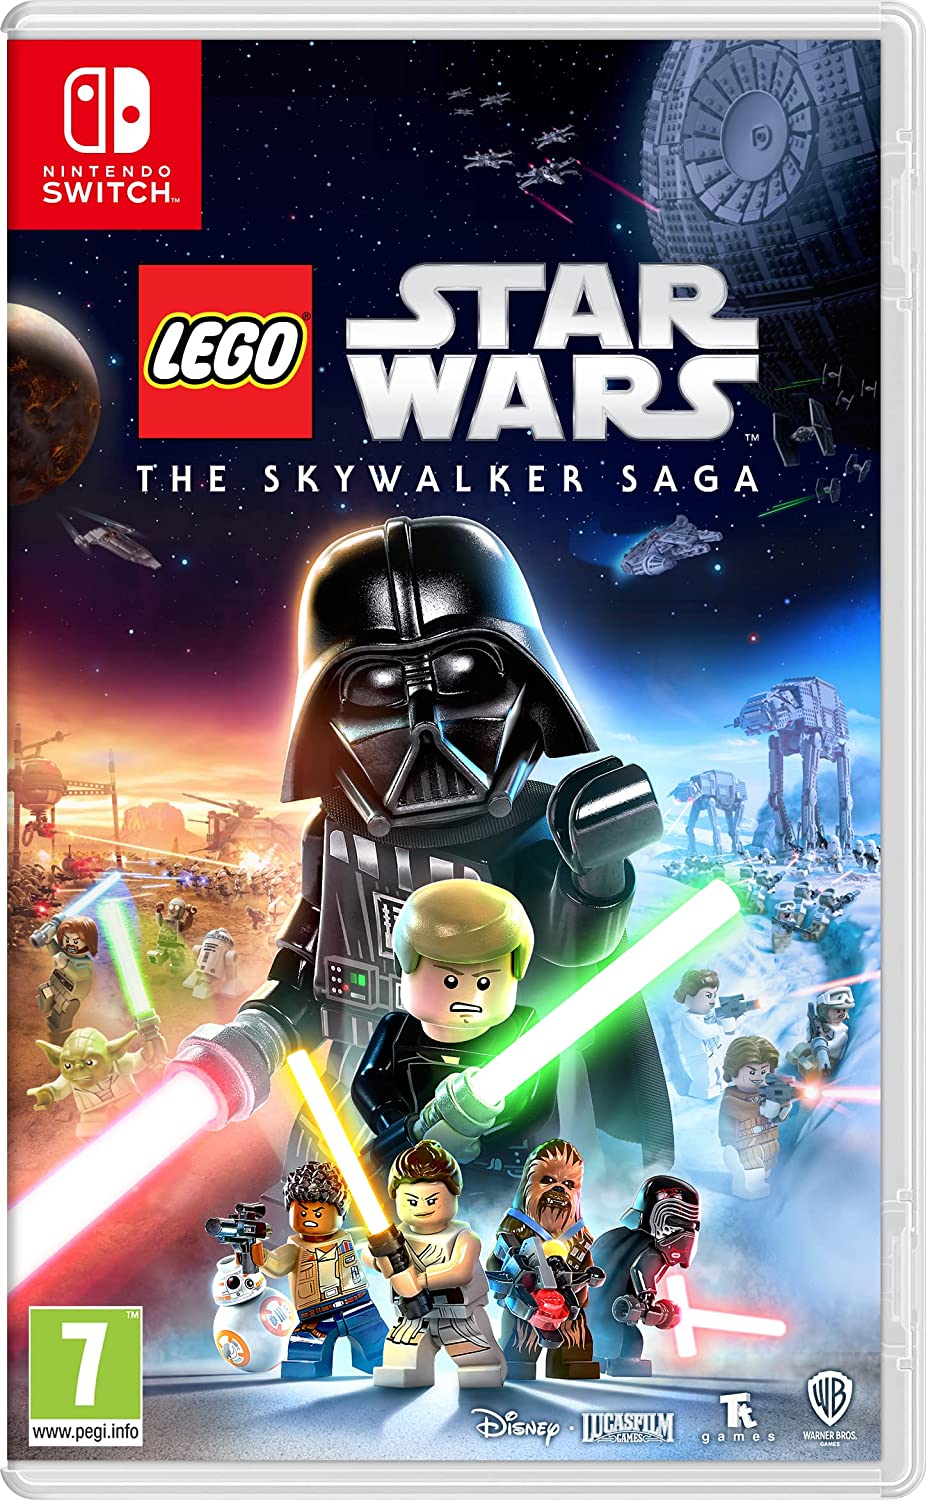 LEGO Star Wars: The Skywalker Saga for Nintendo Switch cover art.